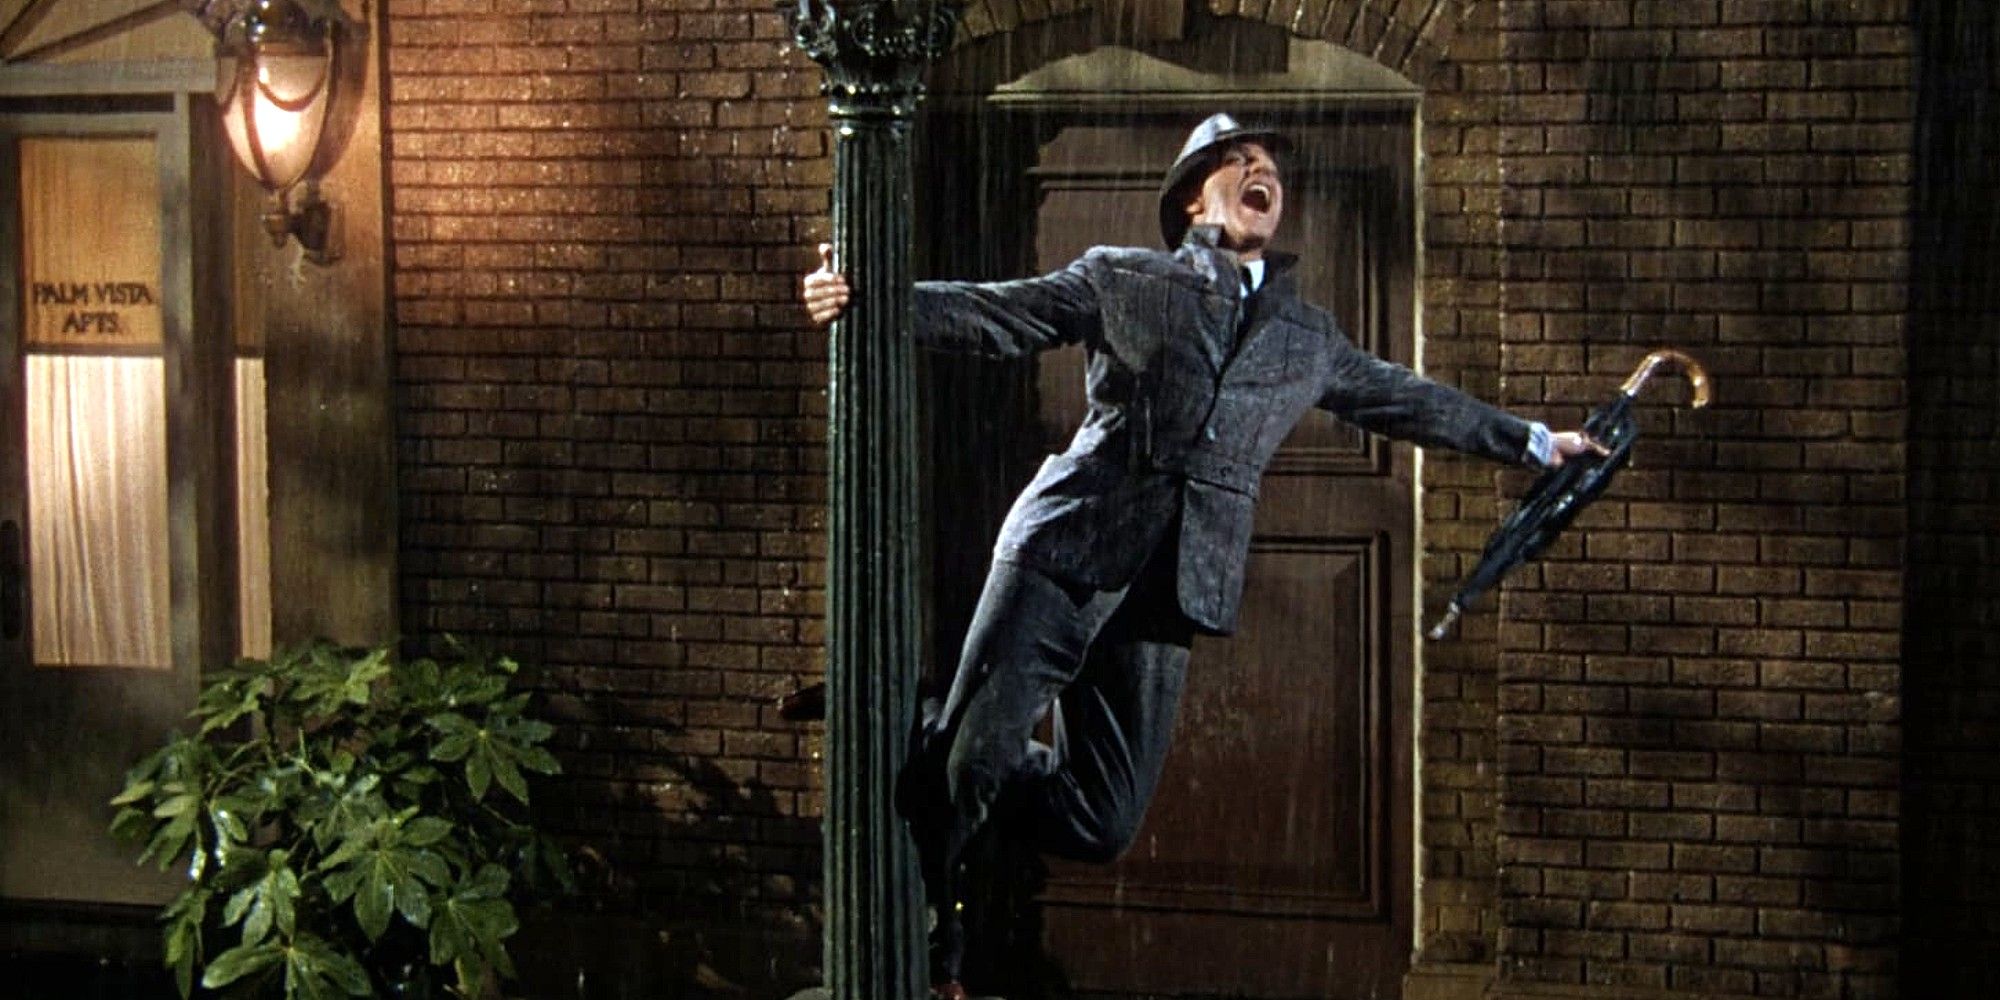 Gene Kelly dancing with an umbrella in Singin' in the Rain